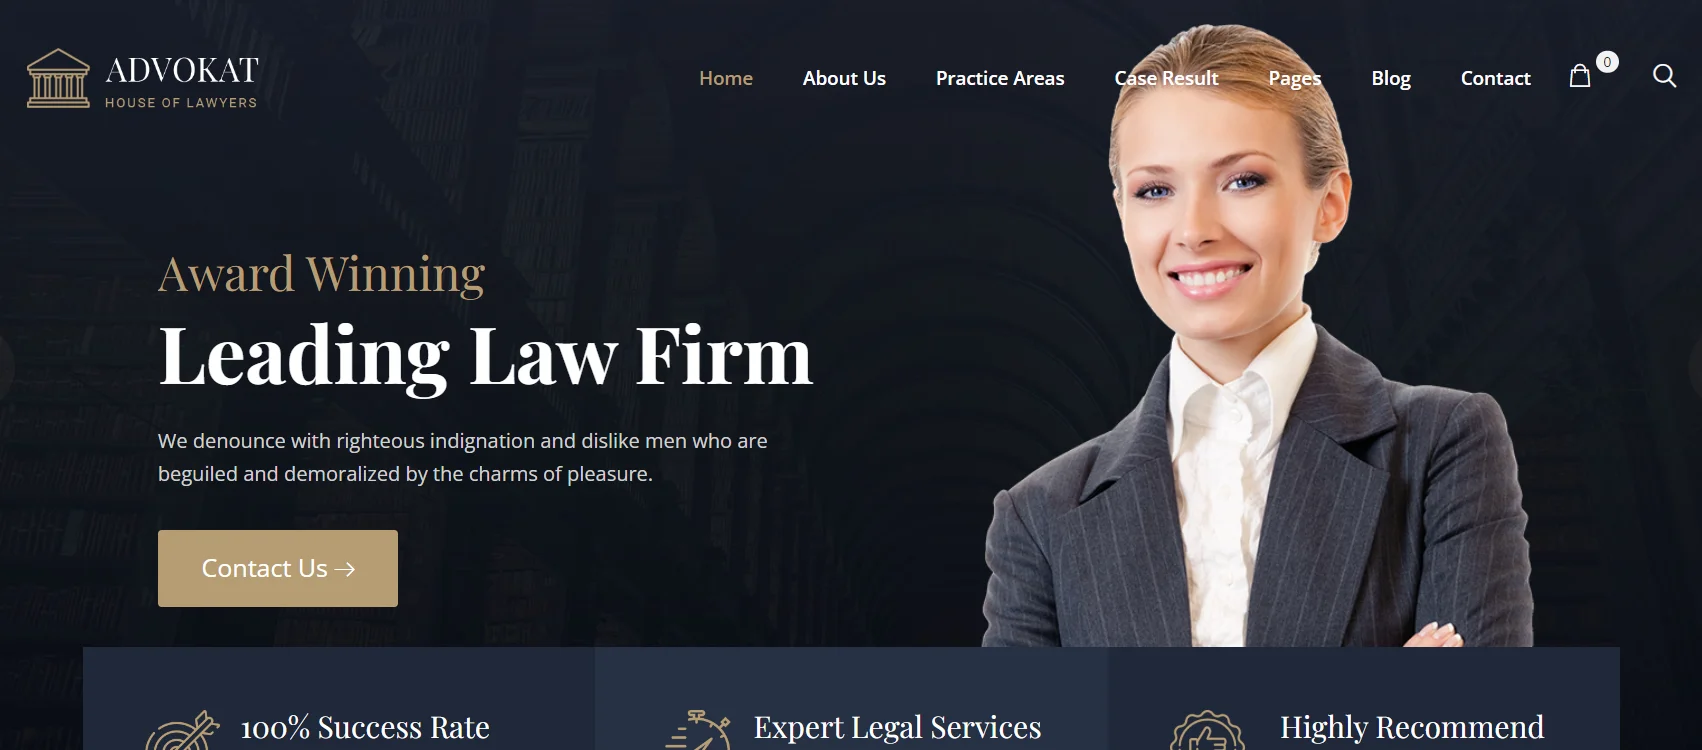 Advokat WordPress Theme for Lawyers